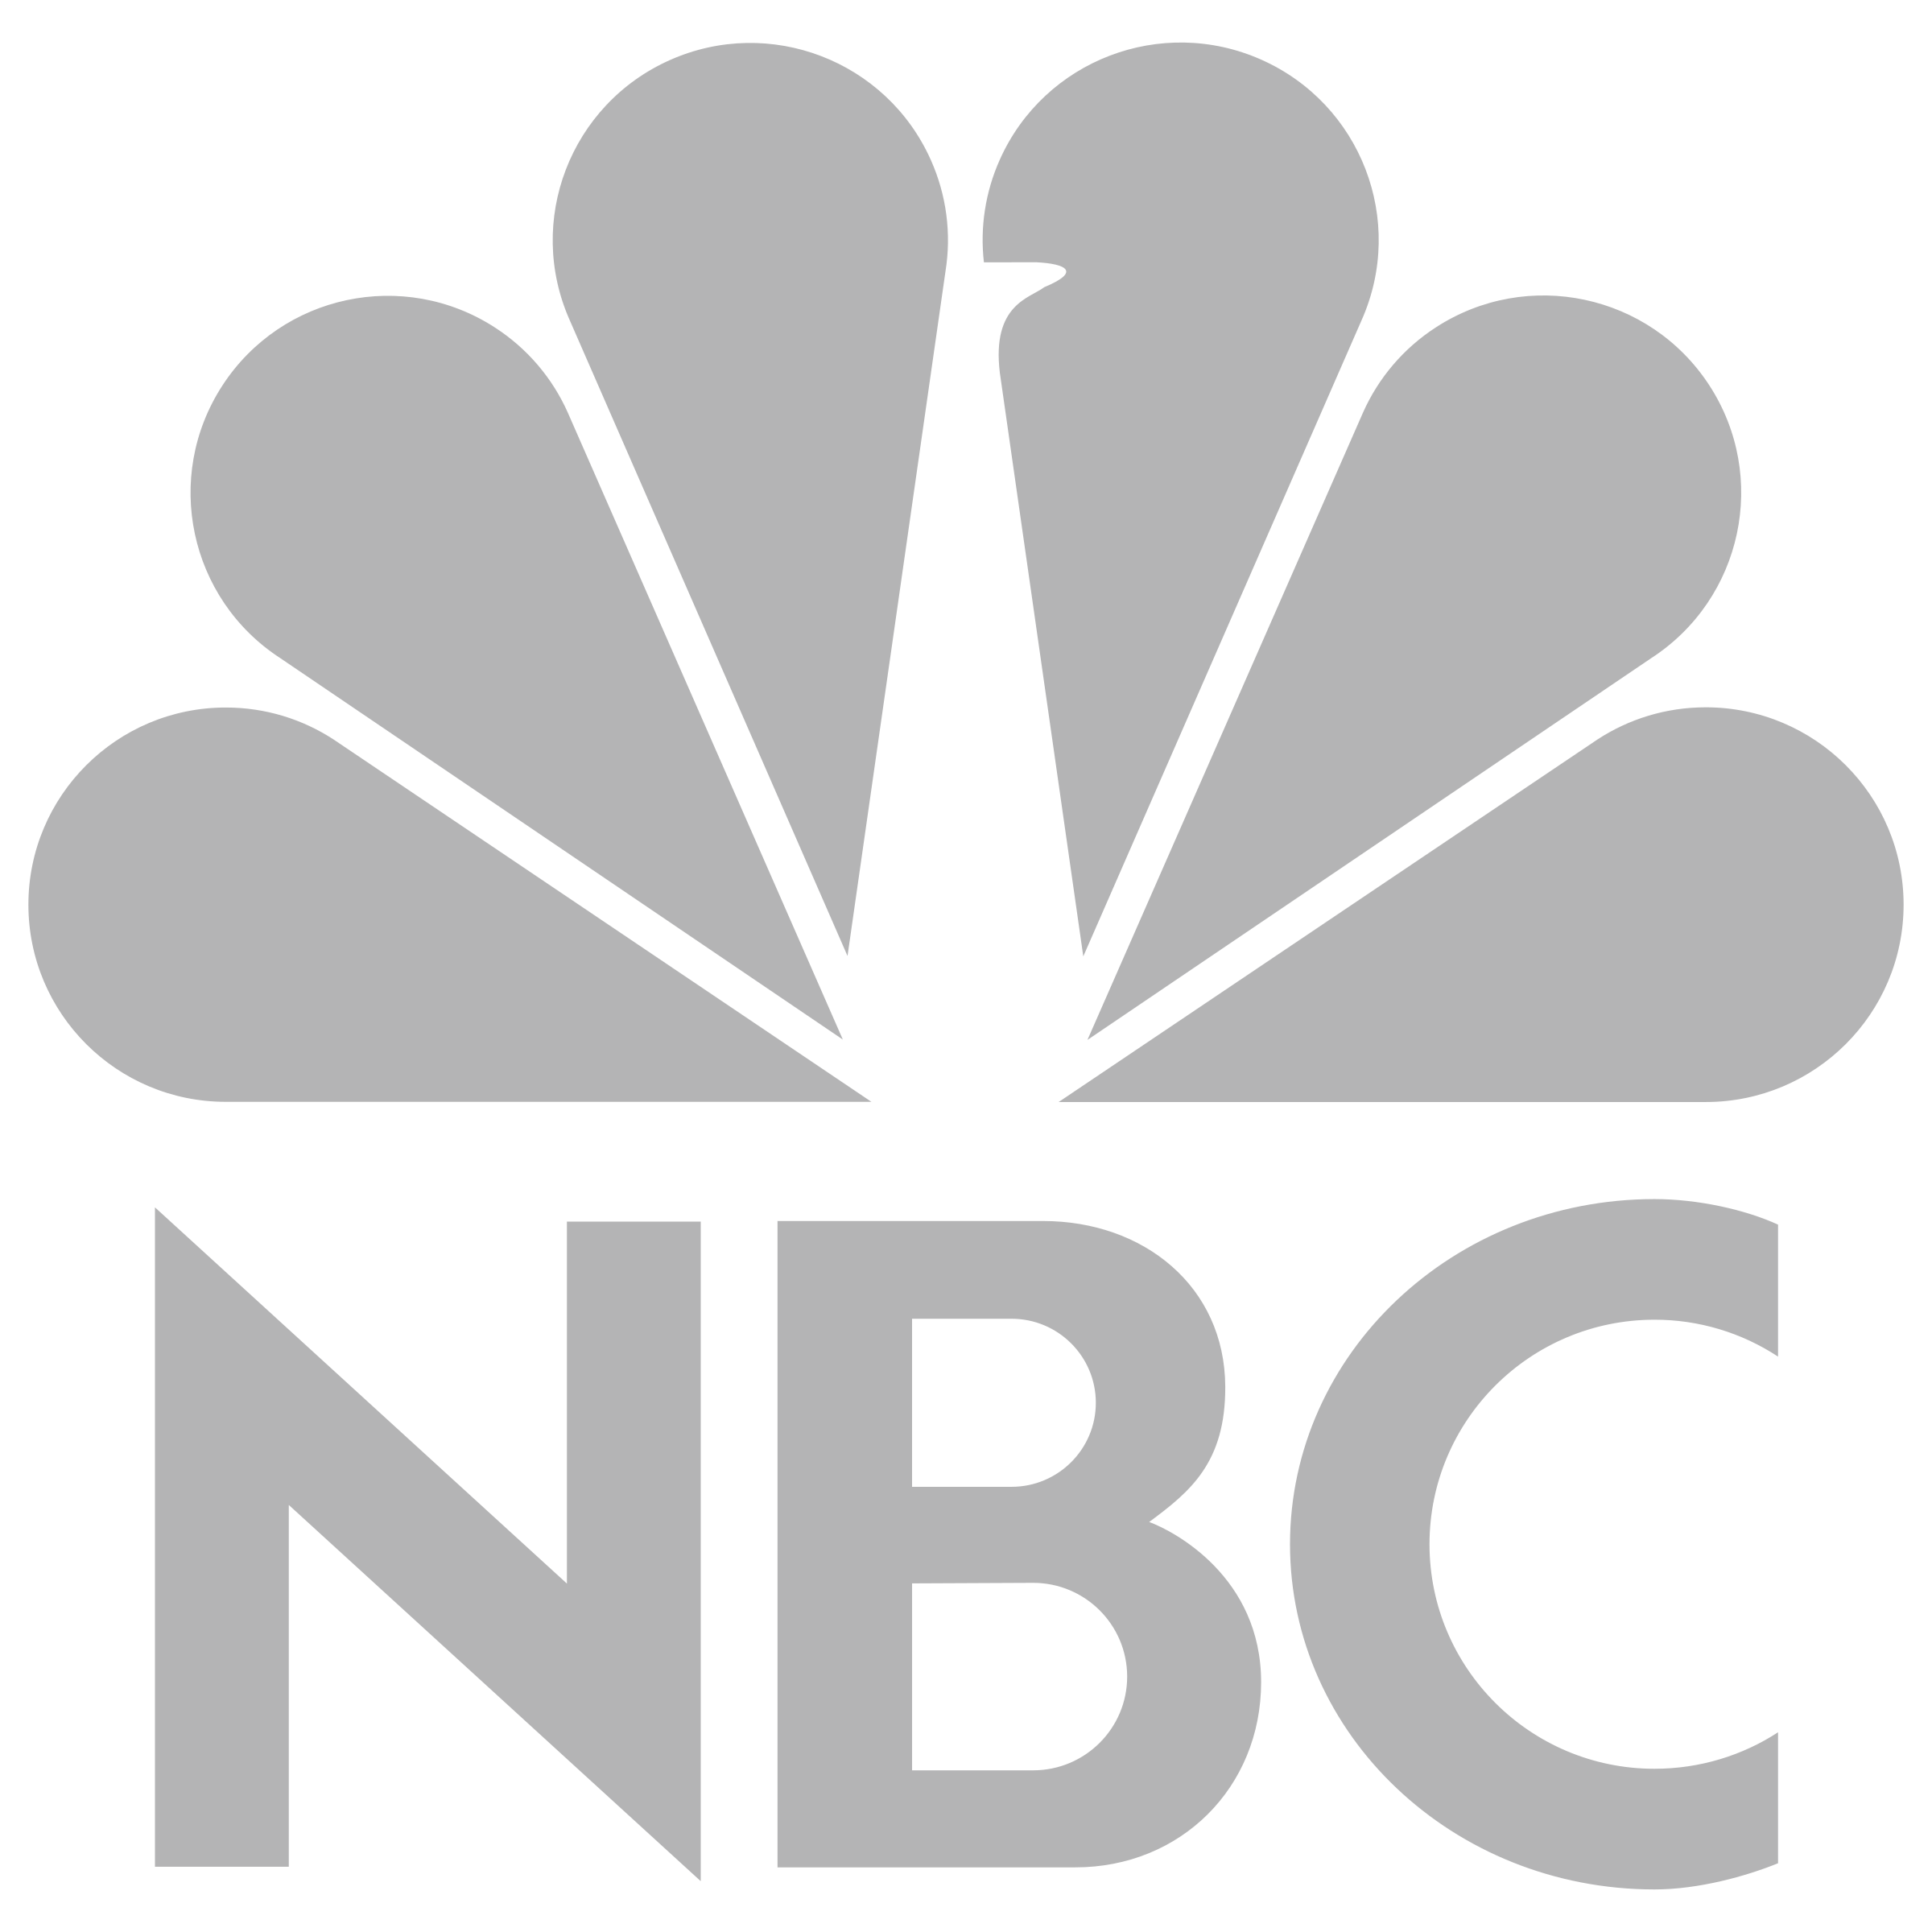 nbc-logo-png-transparent.png